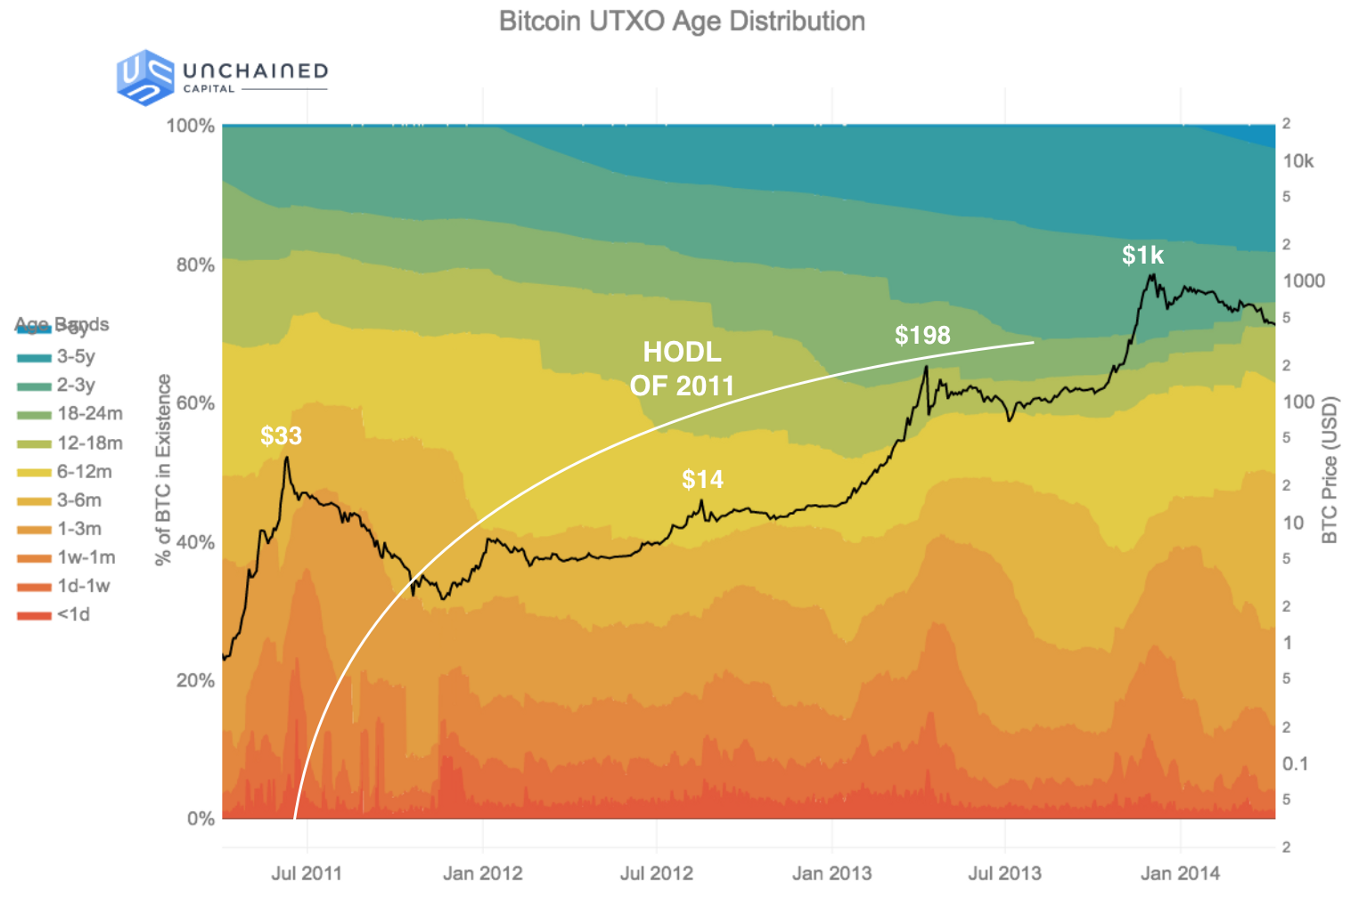 Bitcoin UTXO age distribution